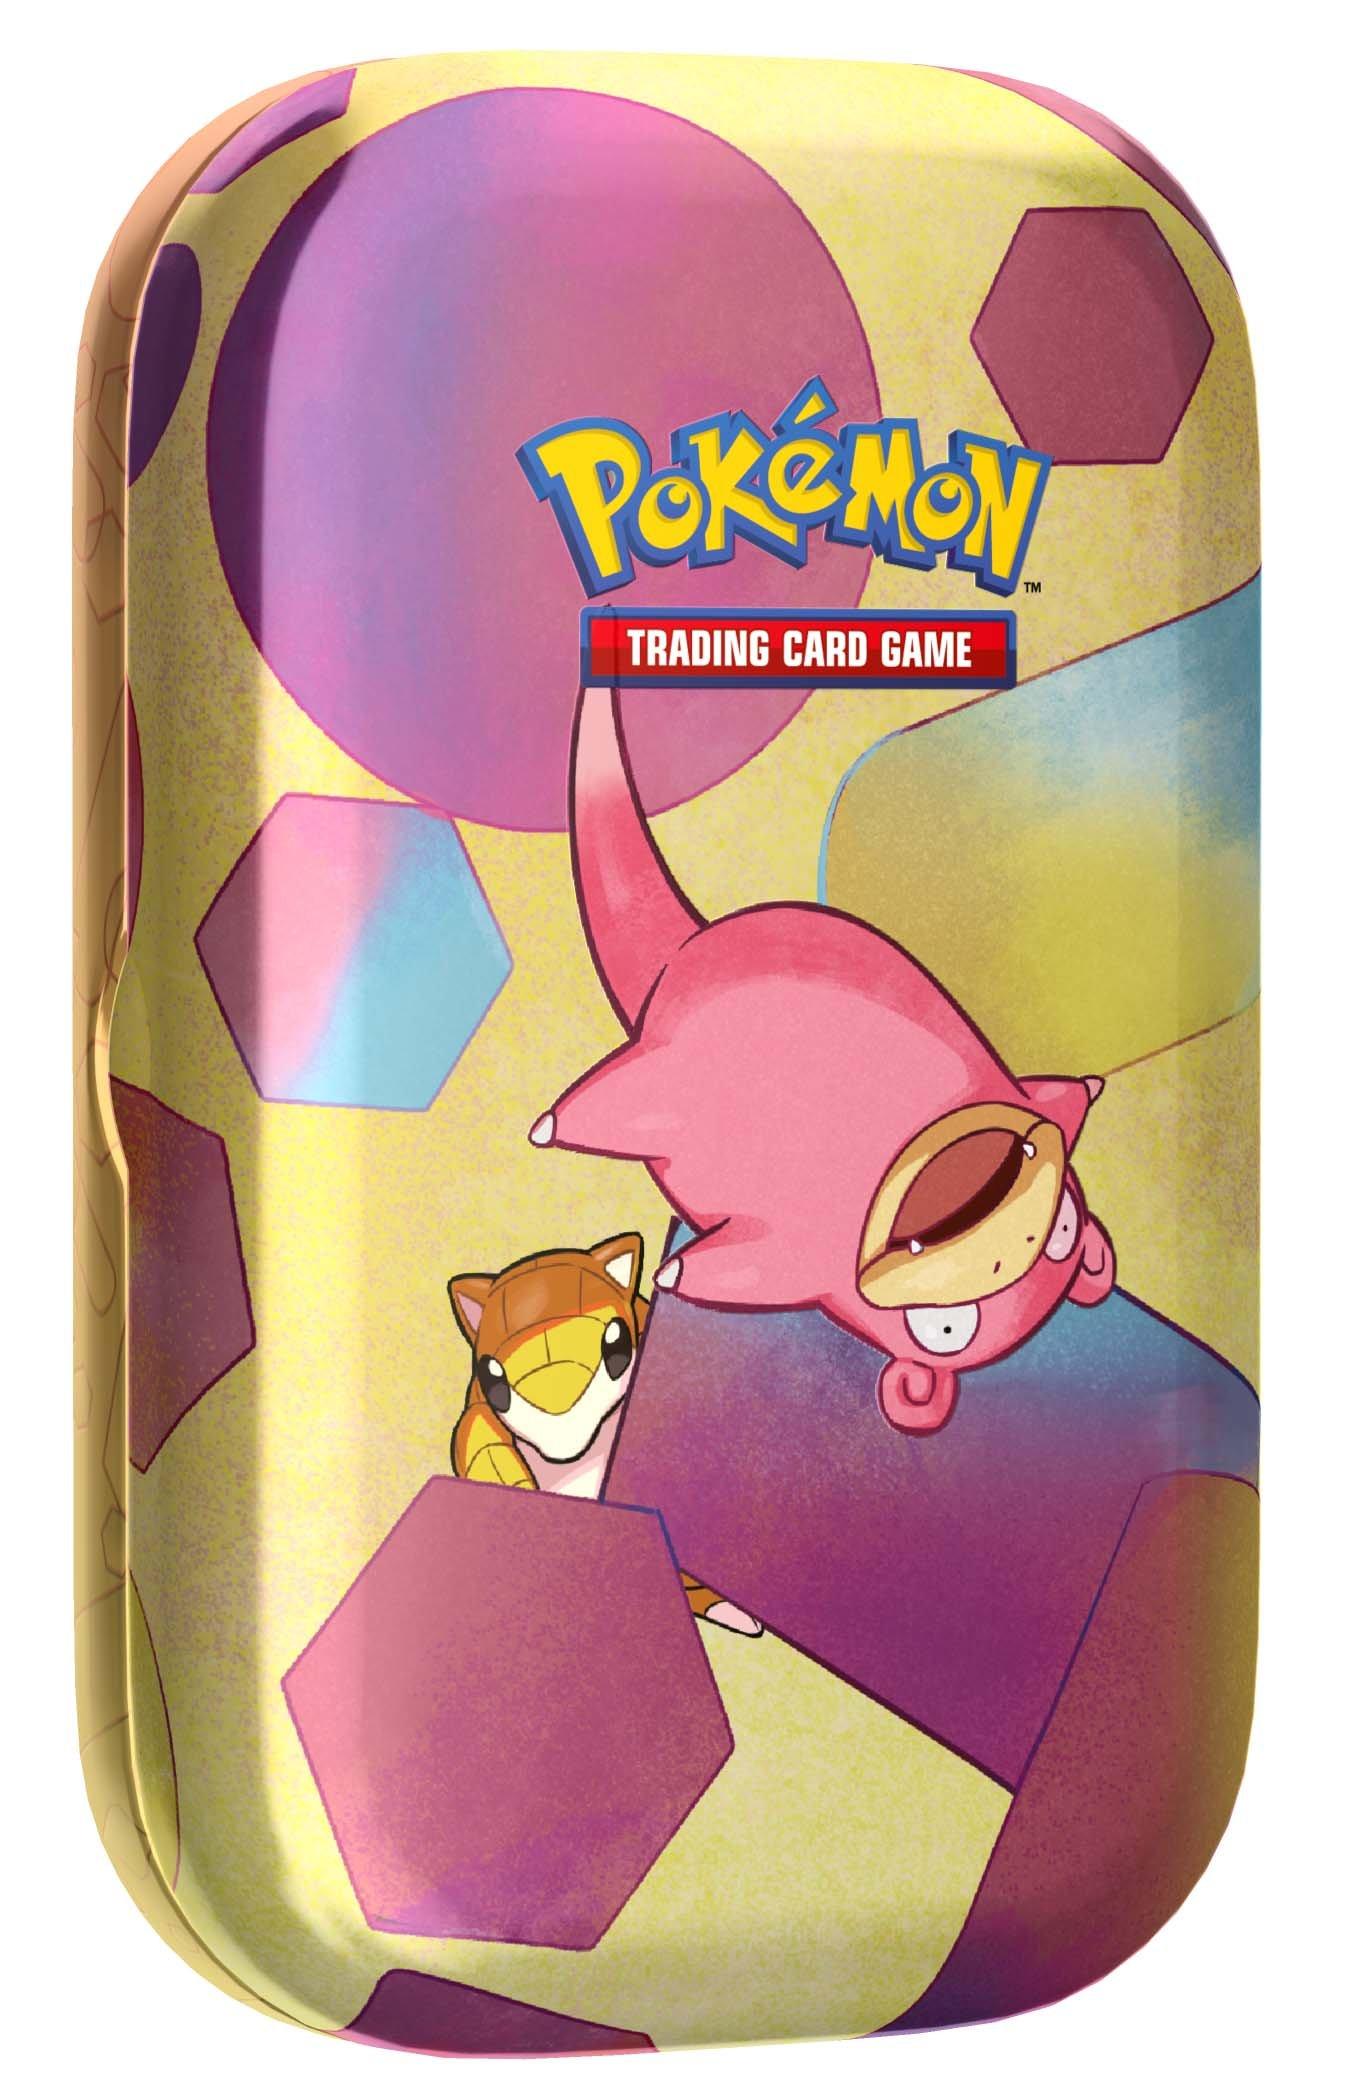 Pokémon Clothing and accessories - Pokémon: Scarlet & Violet 151